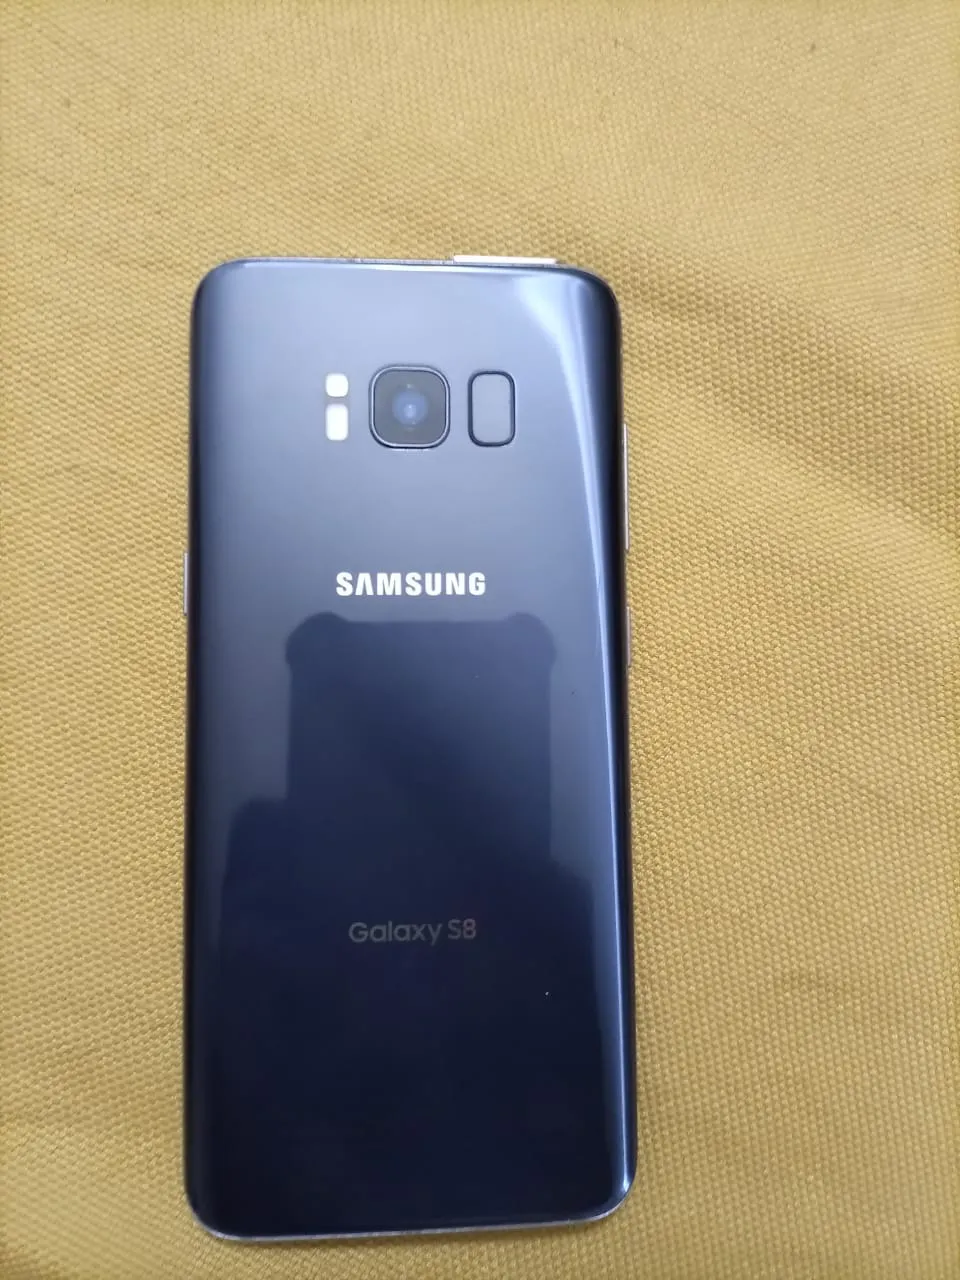 Samsung Galaxy S8 - photo 1